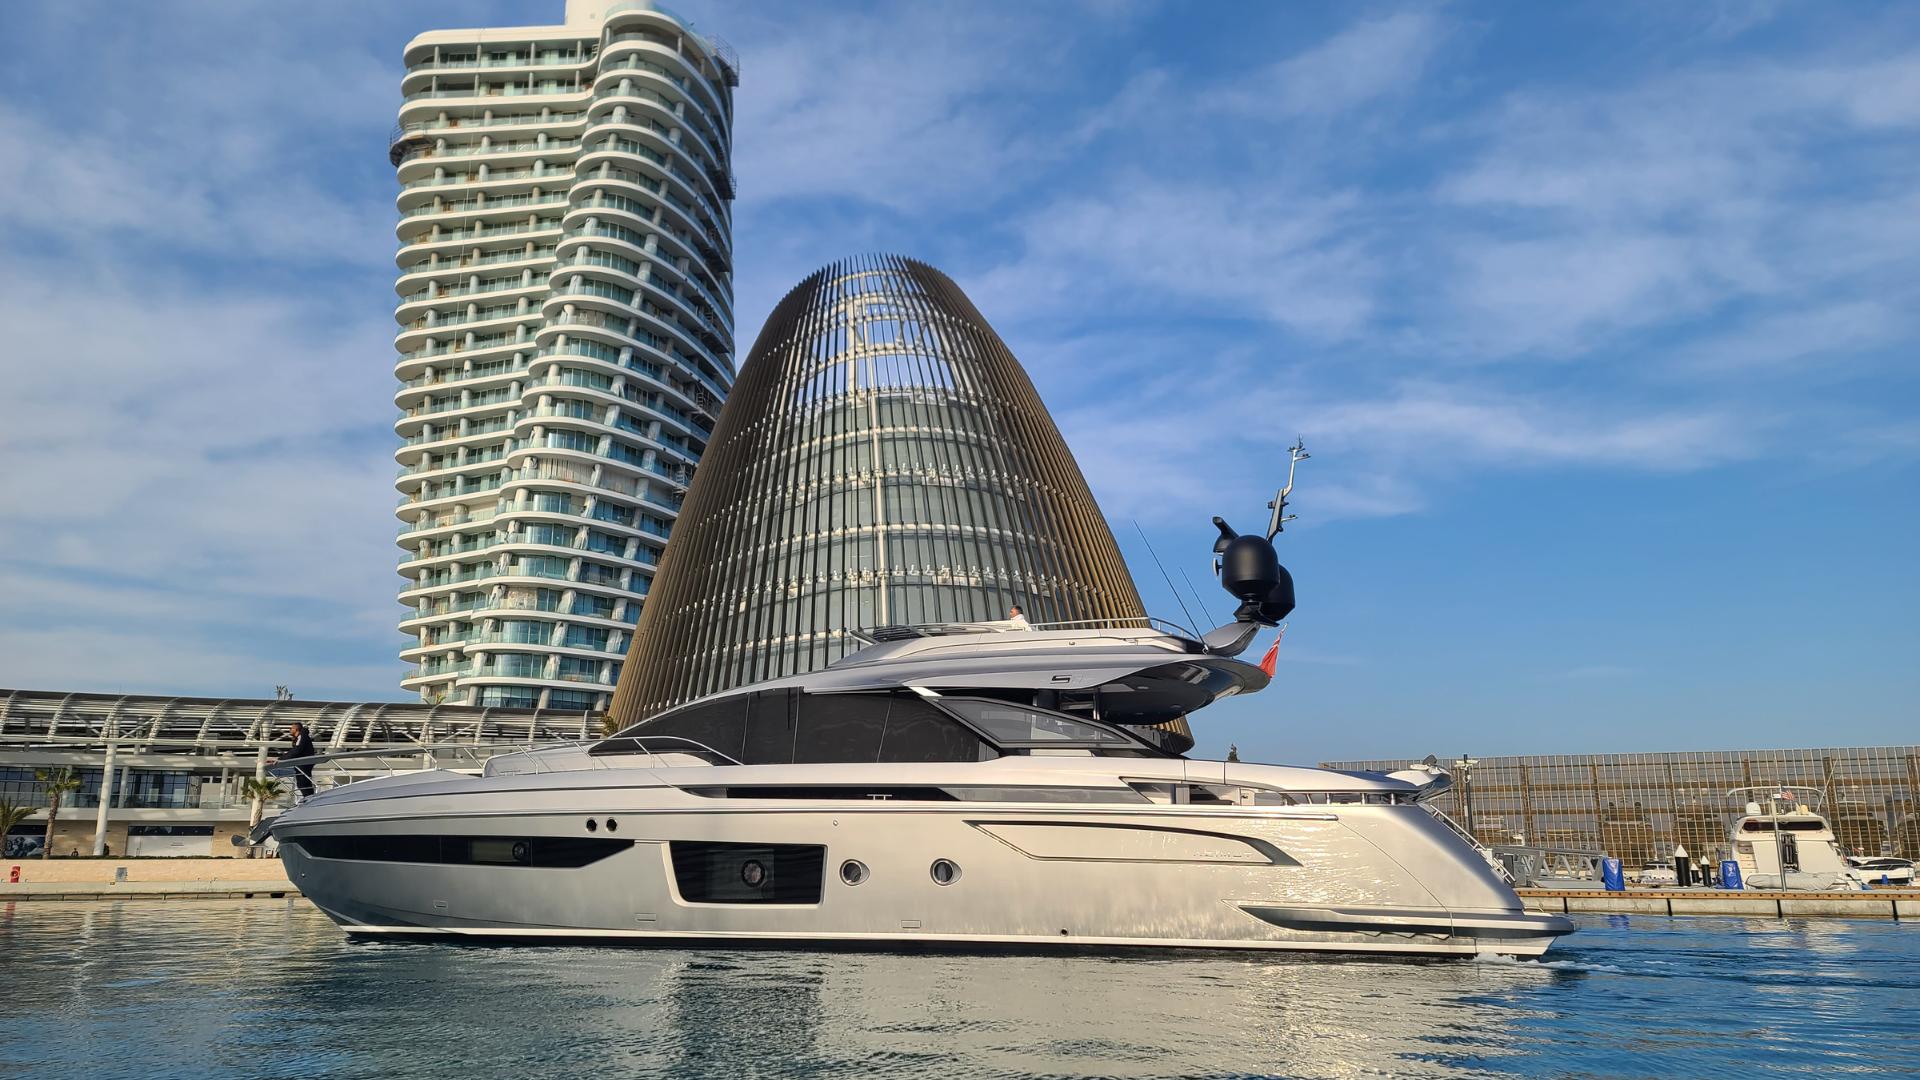 Ayia Napa Marina: Your Luxury Yachting Destination in the Mediterranean